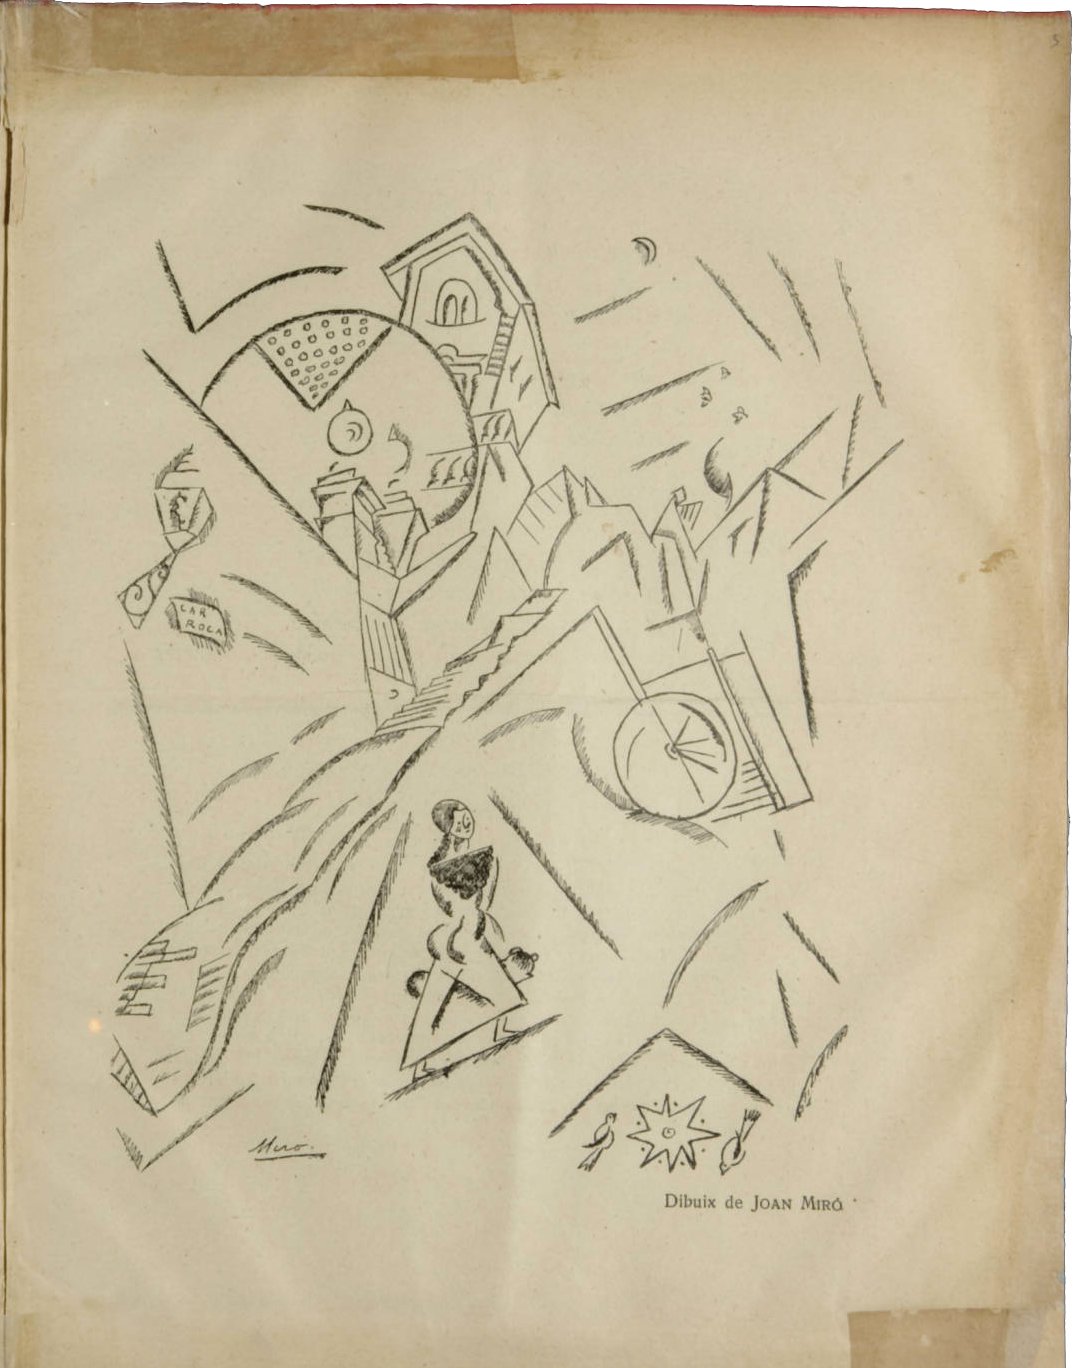 Joan Miró, Carrer de Pedralbes, drawing, published in Troços, Segona sèrie, N. 4, March 1918